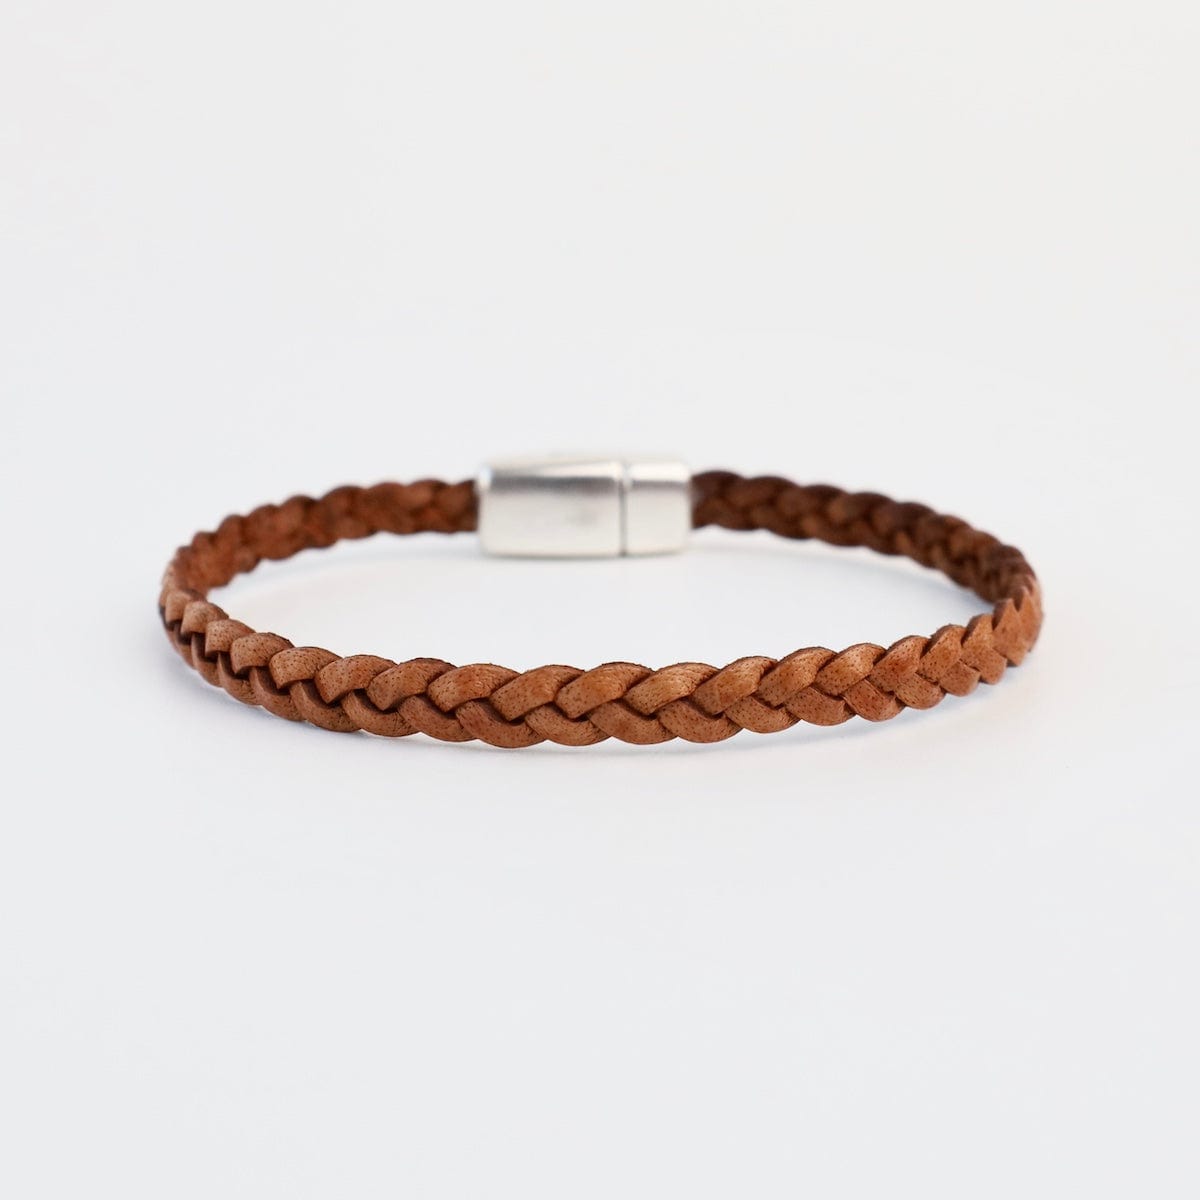 BRC Braided Tan Leather Bracelet - approx 7.5"